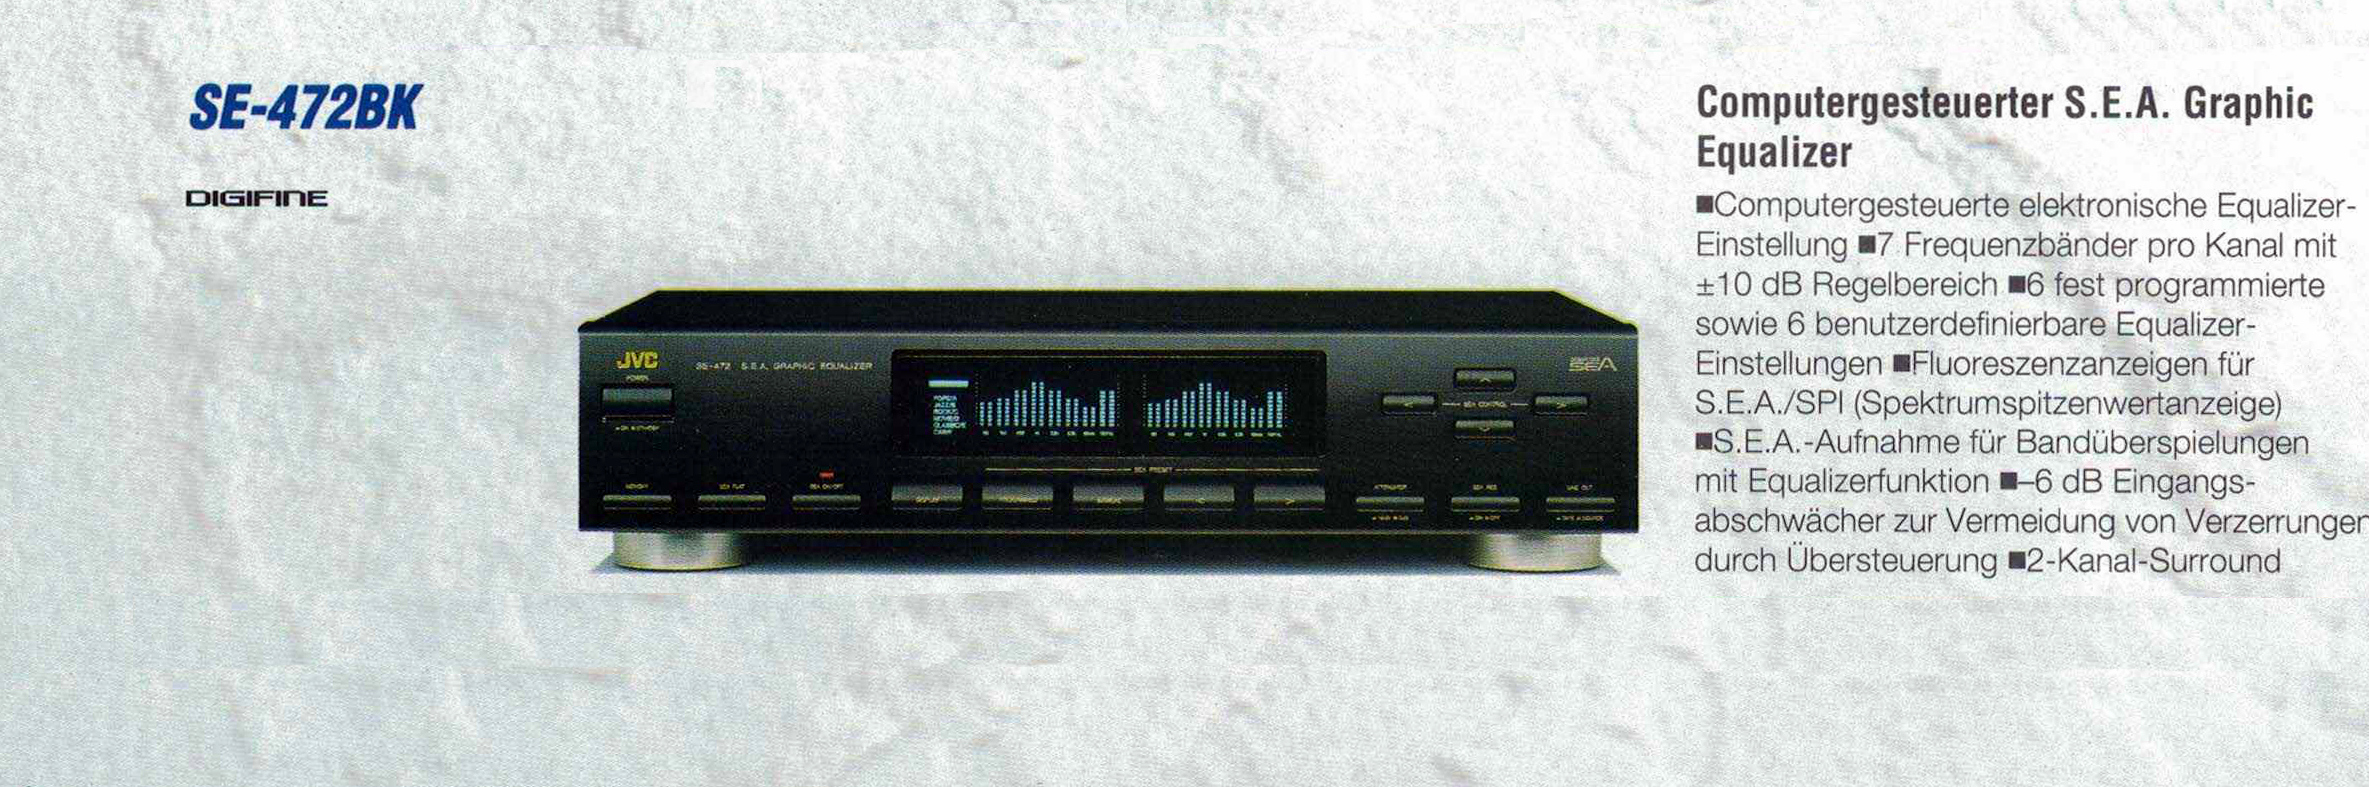 JVC SEA-472 BK-Prospekt-1994.jpg